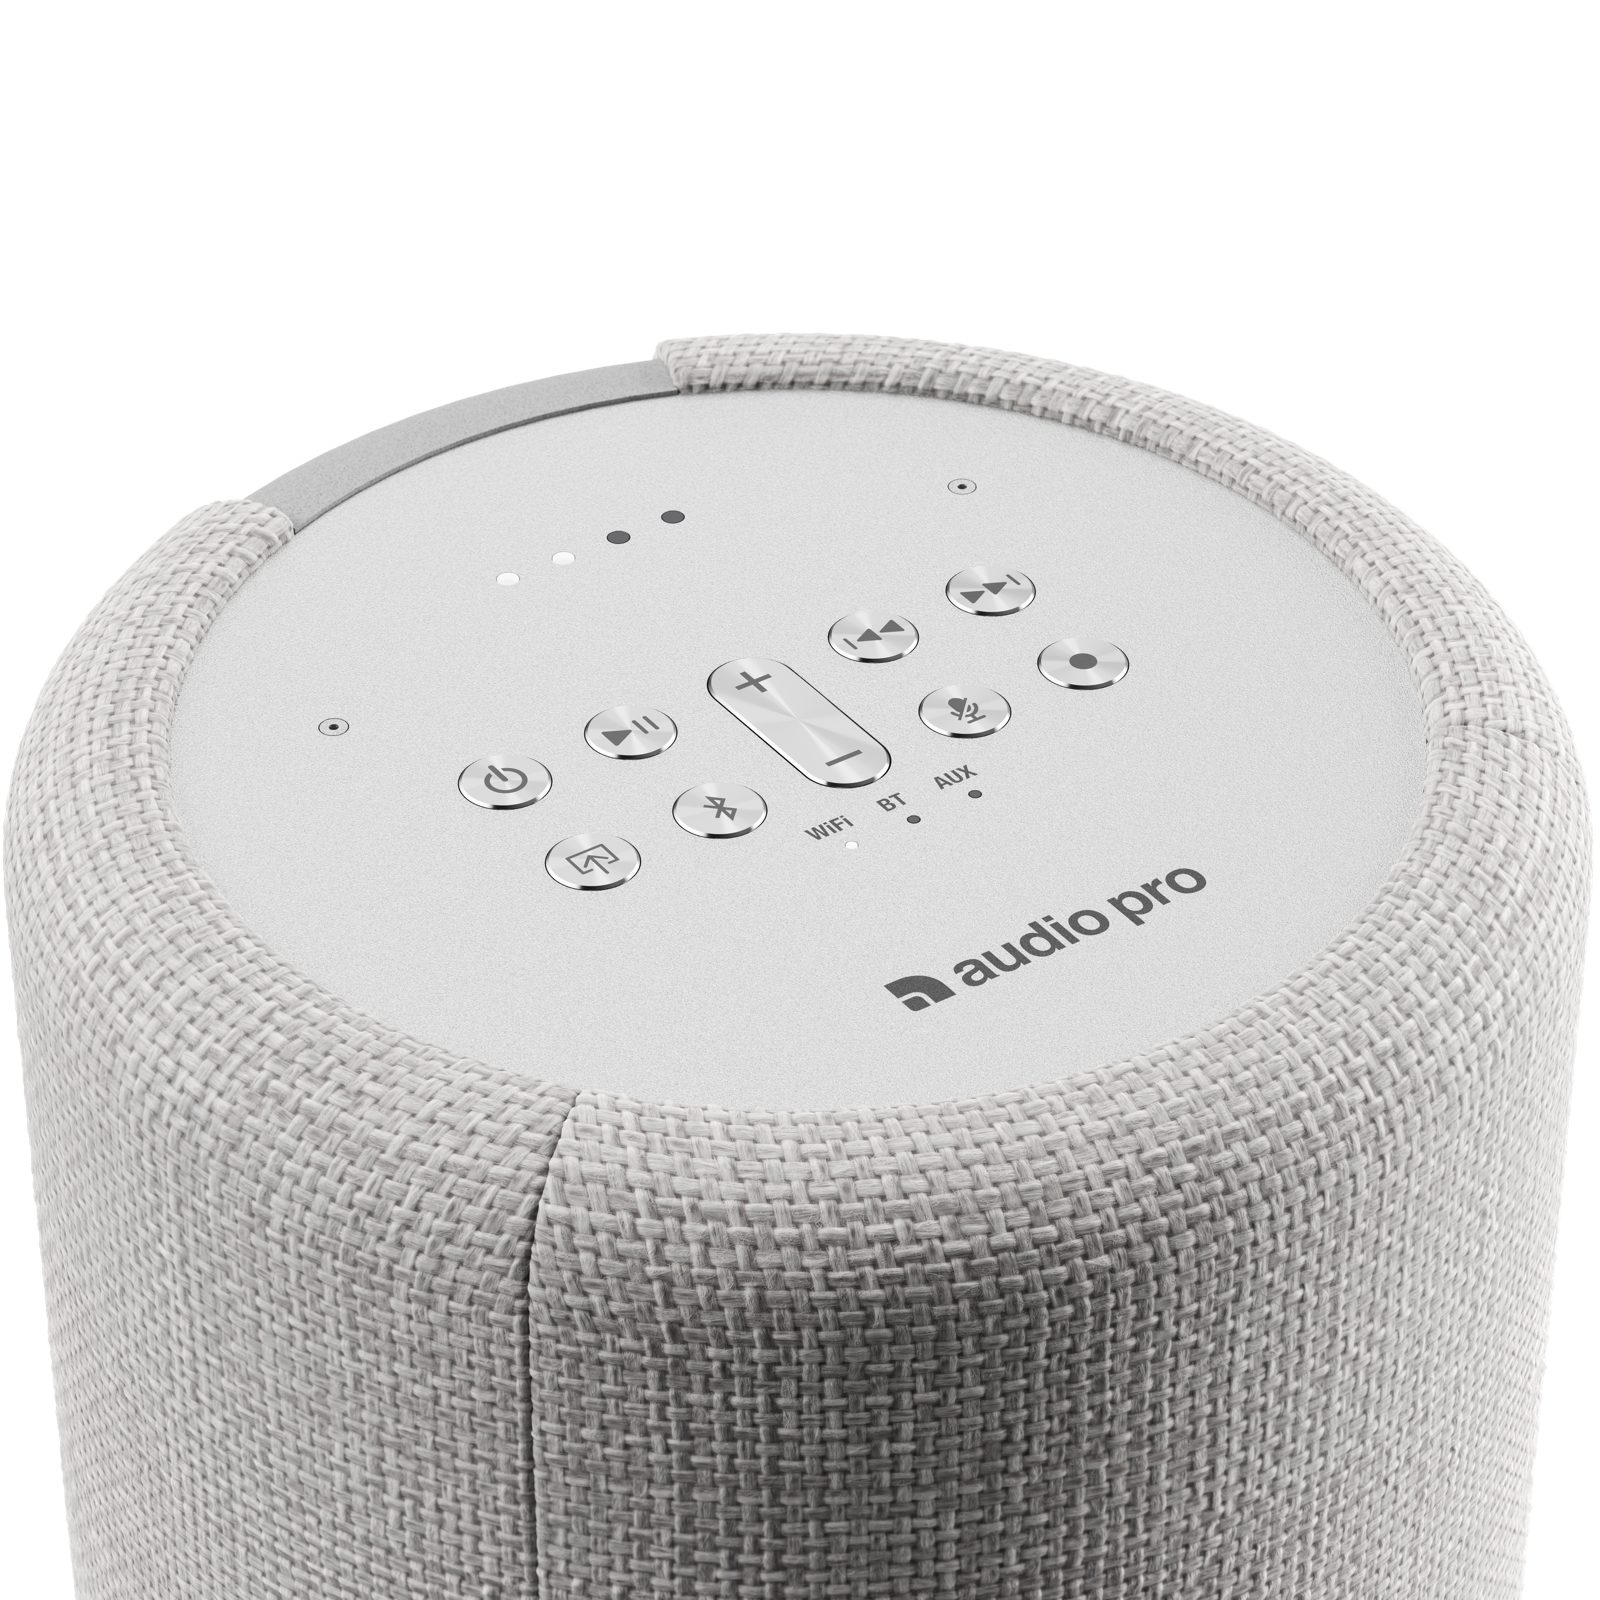 Lautsprecher Pro Audio Hellgrau & Smarter Google Assistant AirPlay 2 Speaker Home